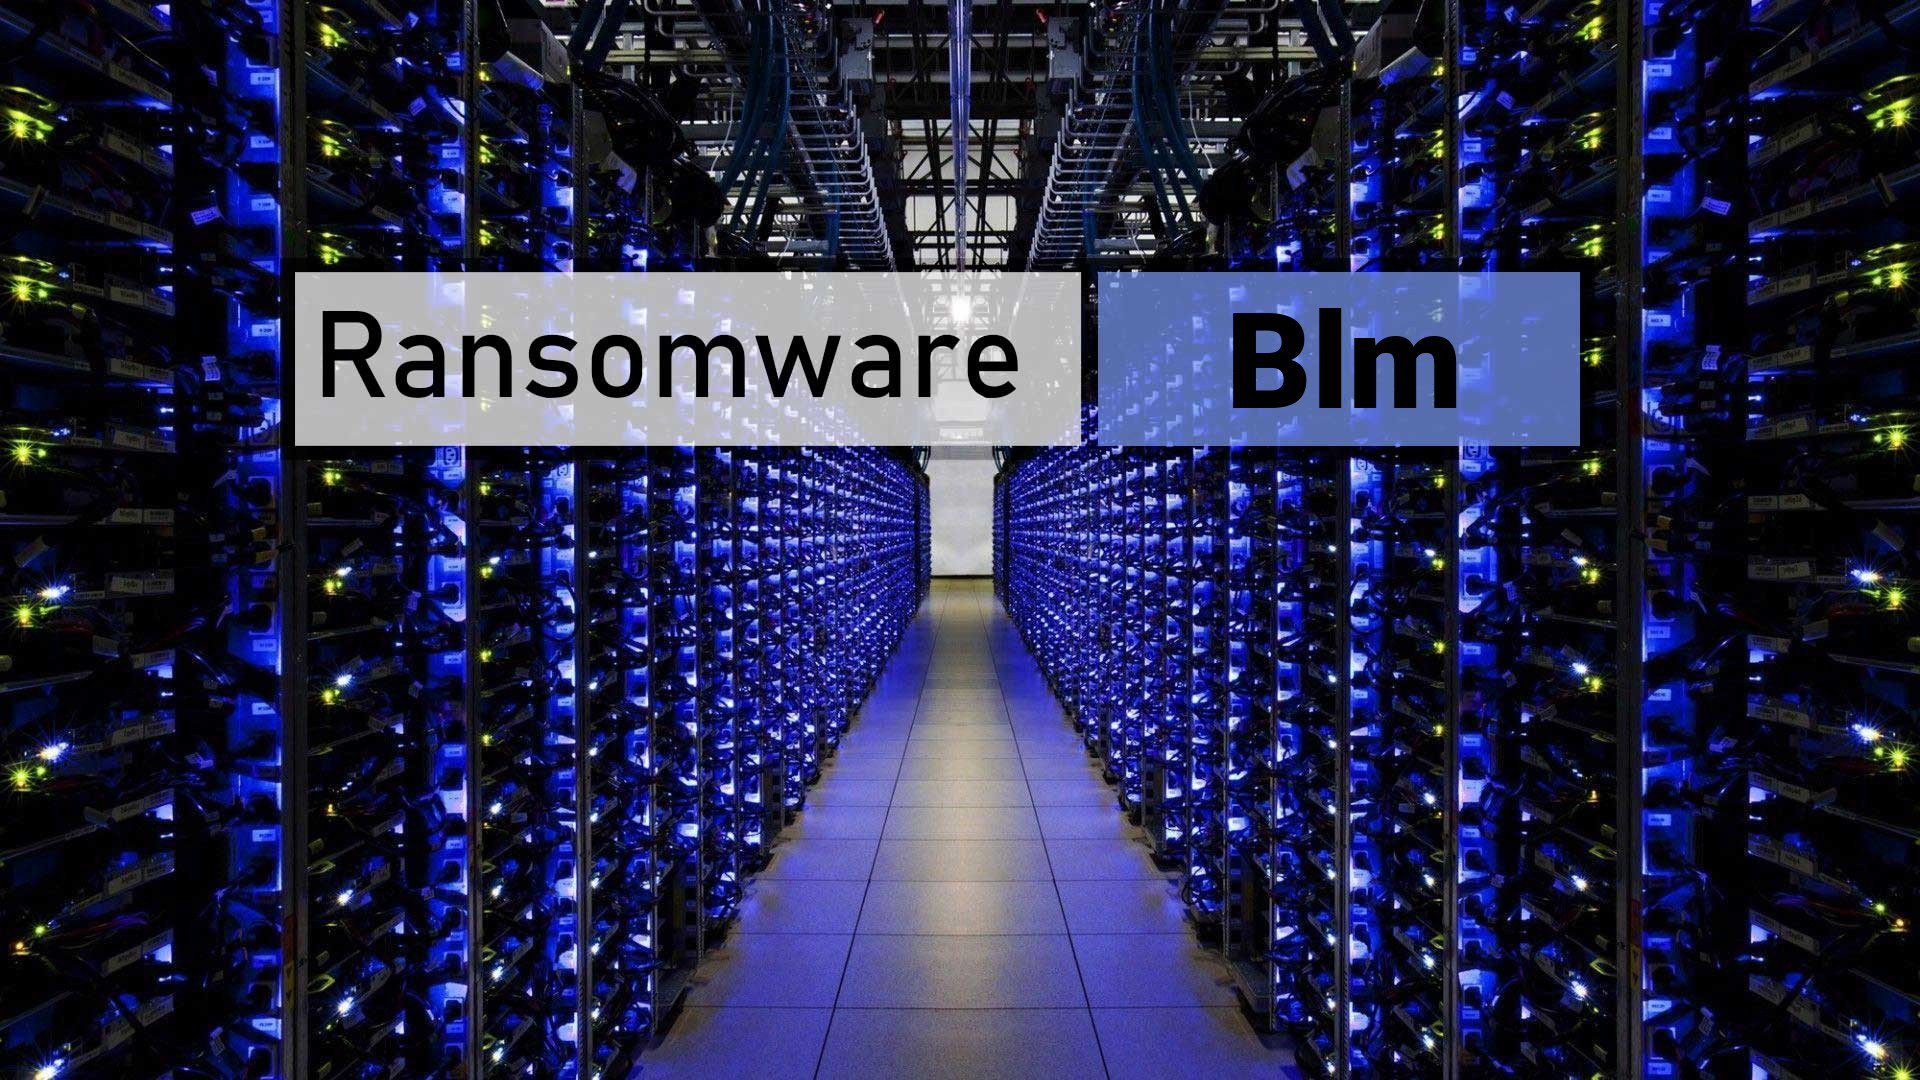 Blm File ☣ Virus — How to remov and decrypt [blacklivesmatter@qq.com].Blm?